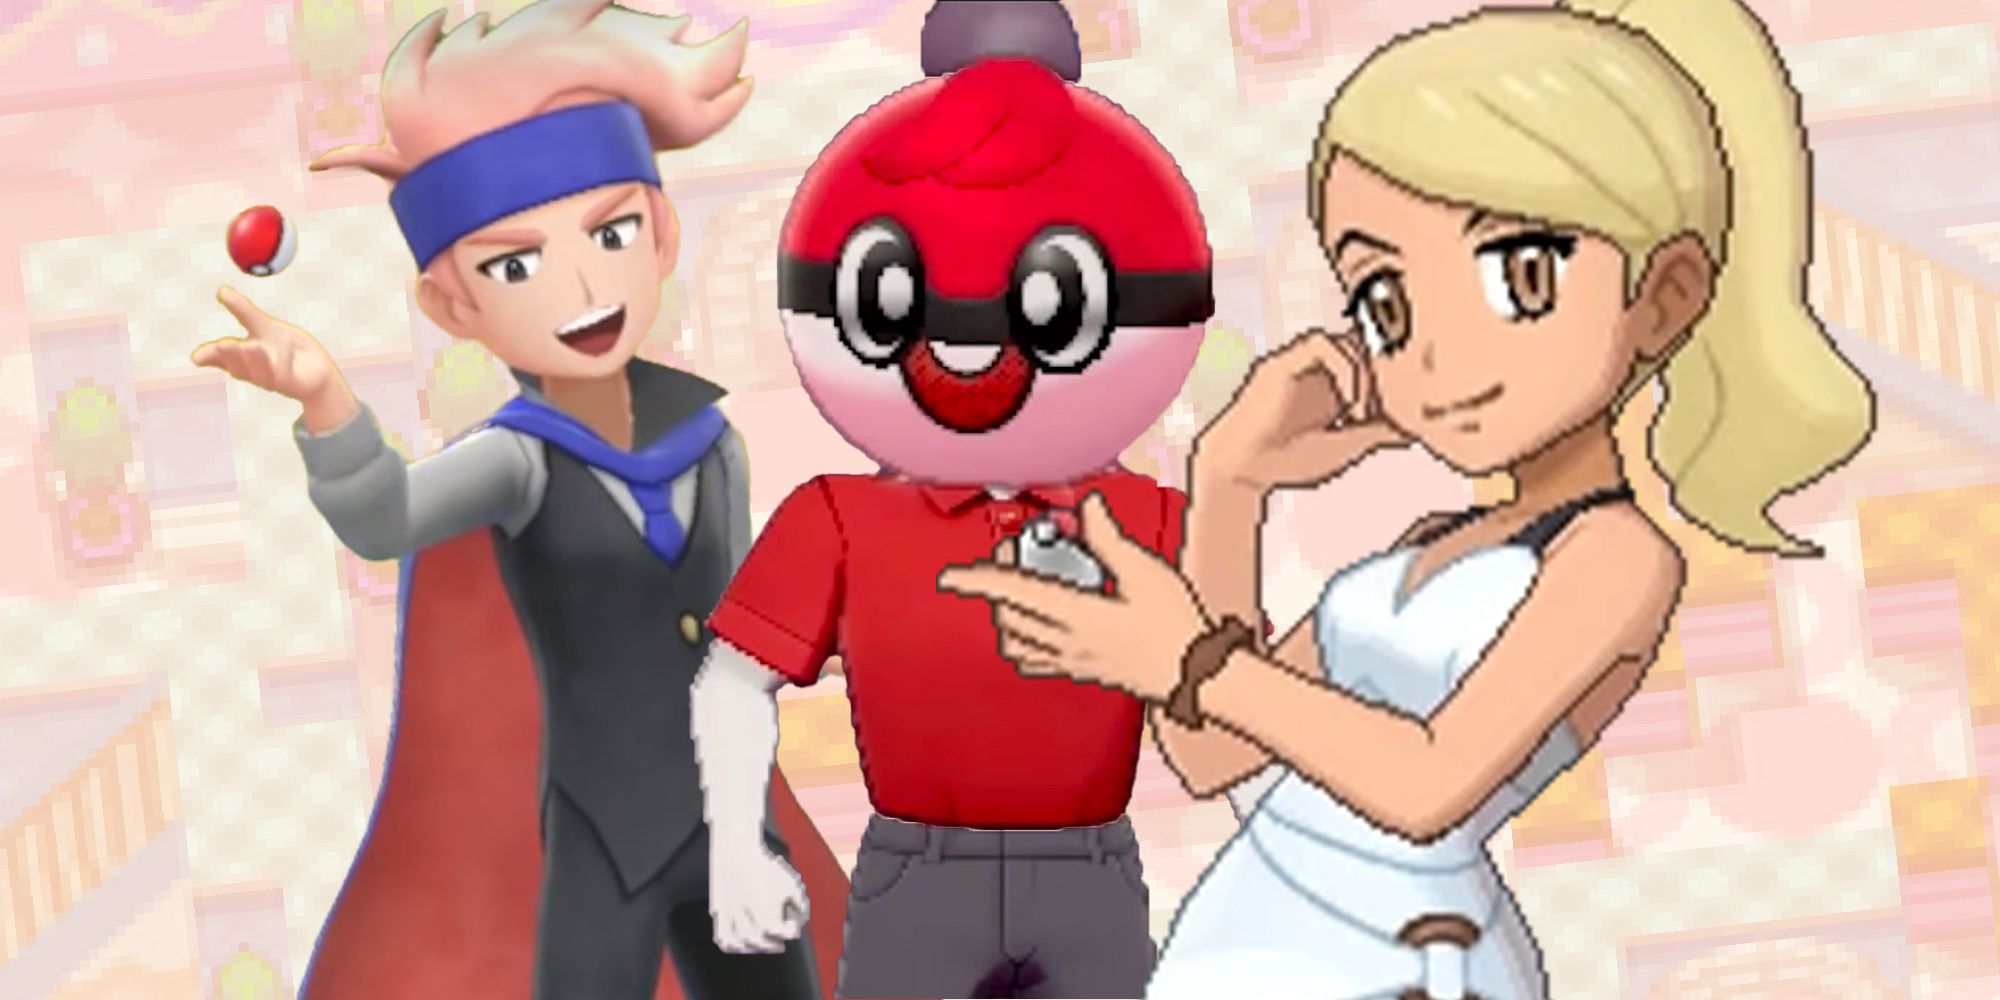 Pokemon trainers, juggler, ball guy, beauty